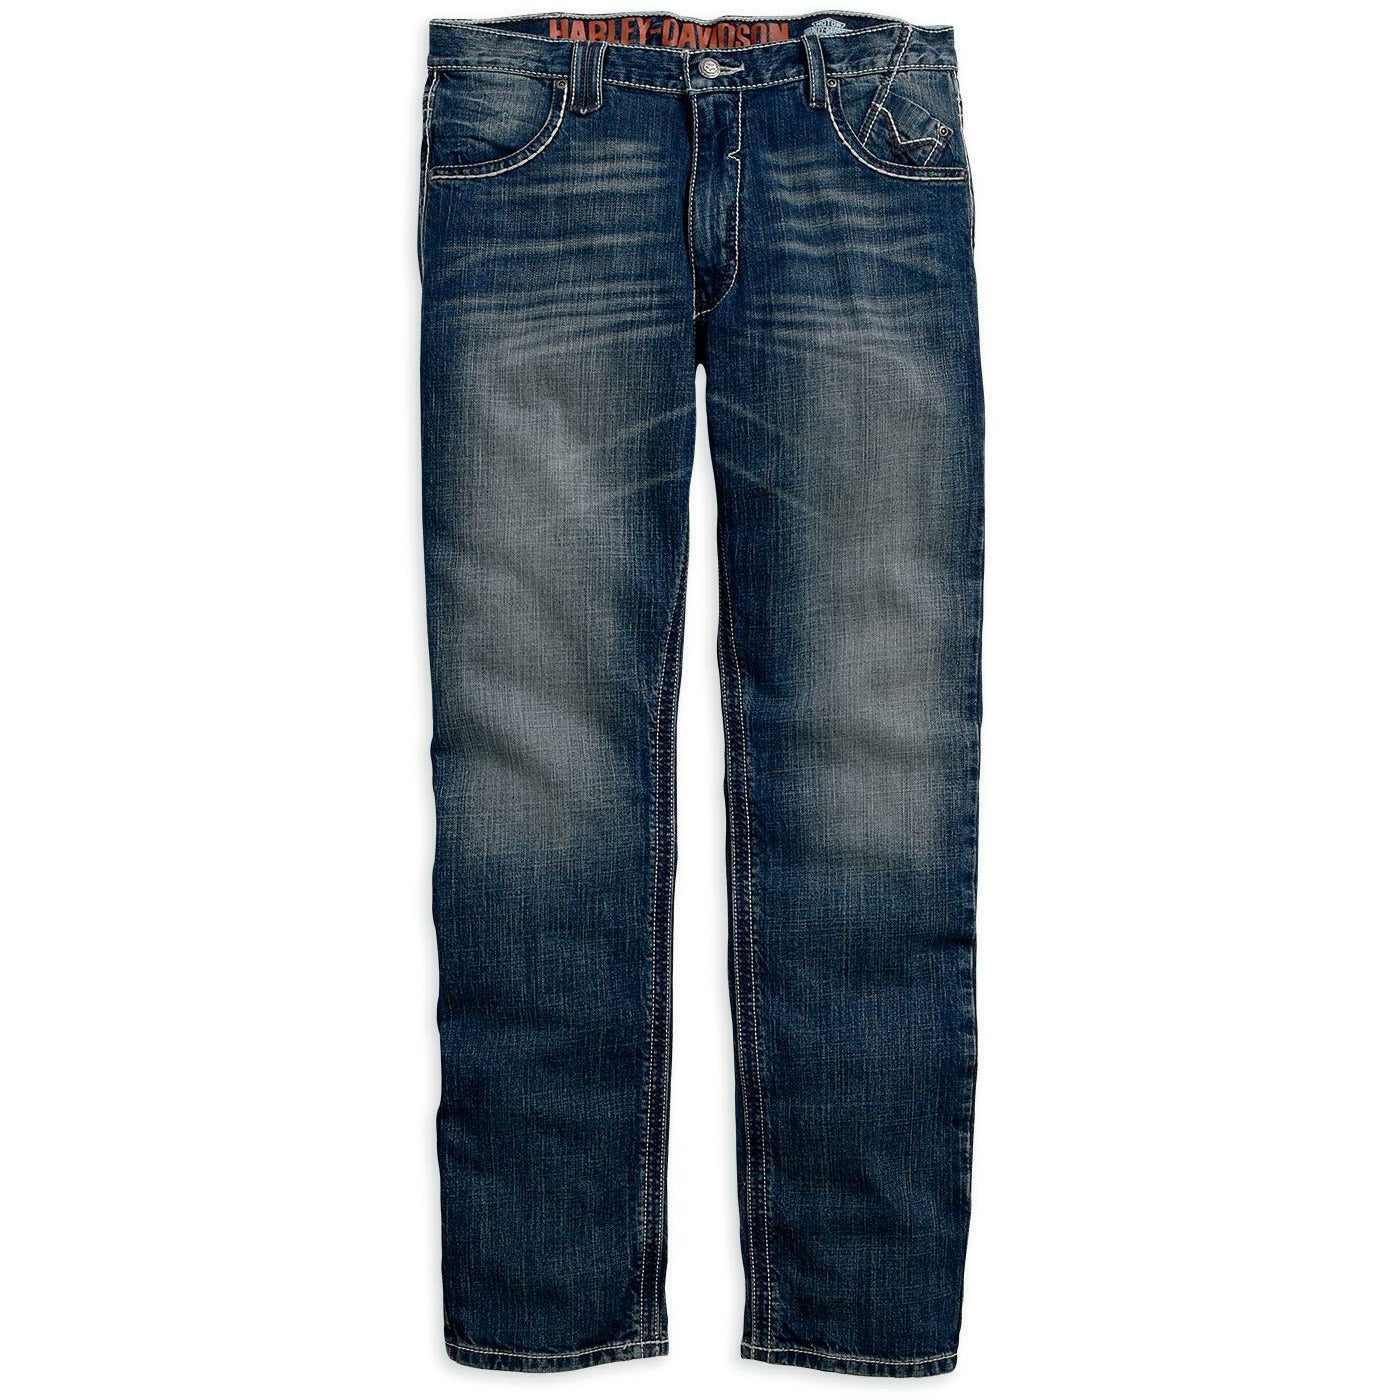 Straight Leg Fit Modern Jeans // 99030-16VM